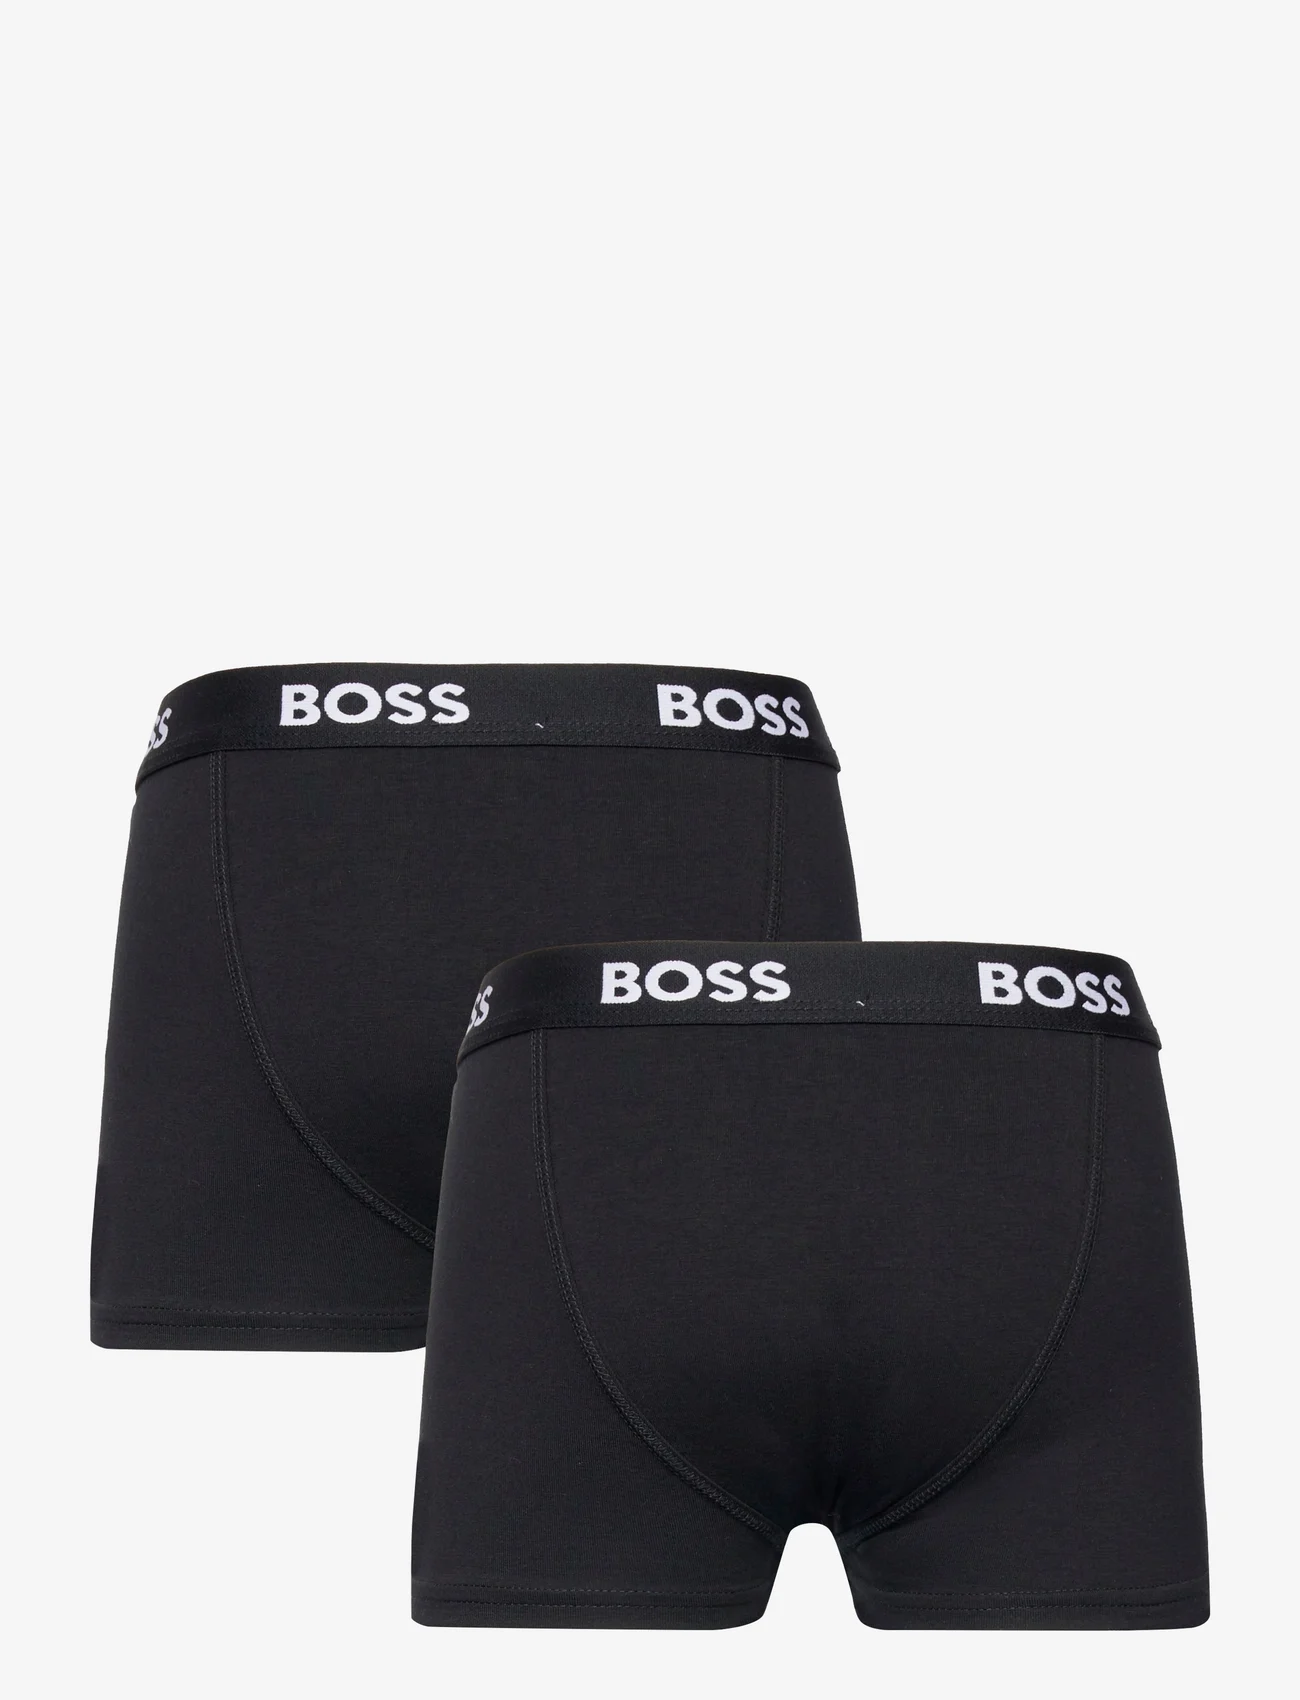 BOSS - SET OF 2 BOXER SHORTS - underpants - black - 1